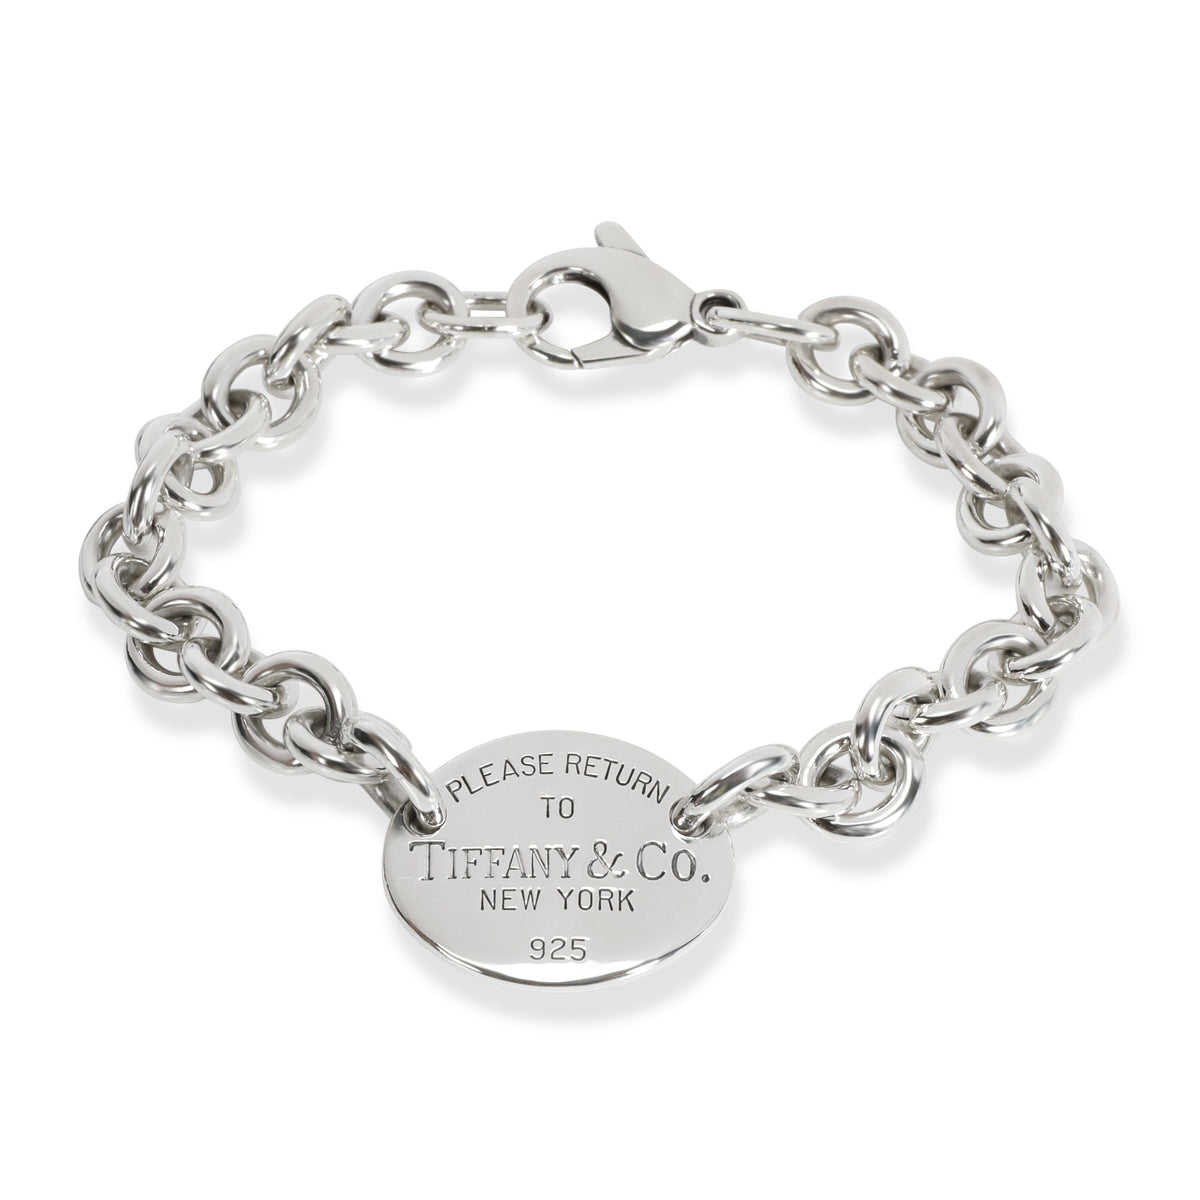 Tiffany & Co. Return to Tiffany Oval Link Bracelet in  Sterling Silver